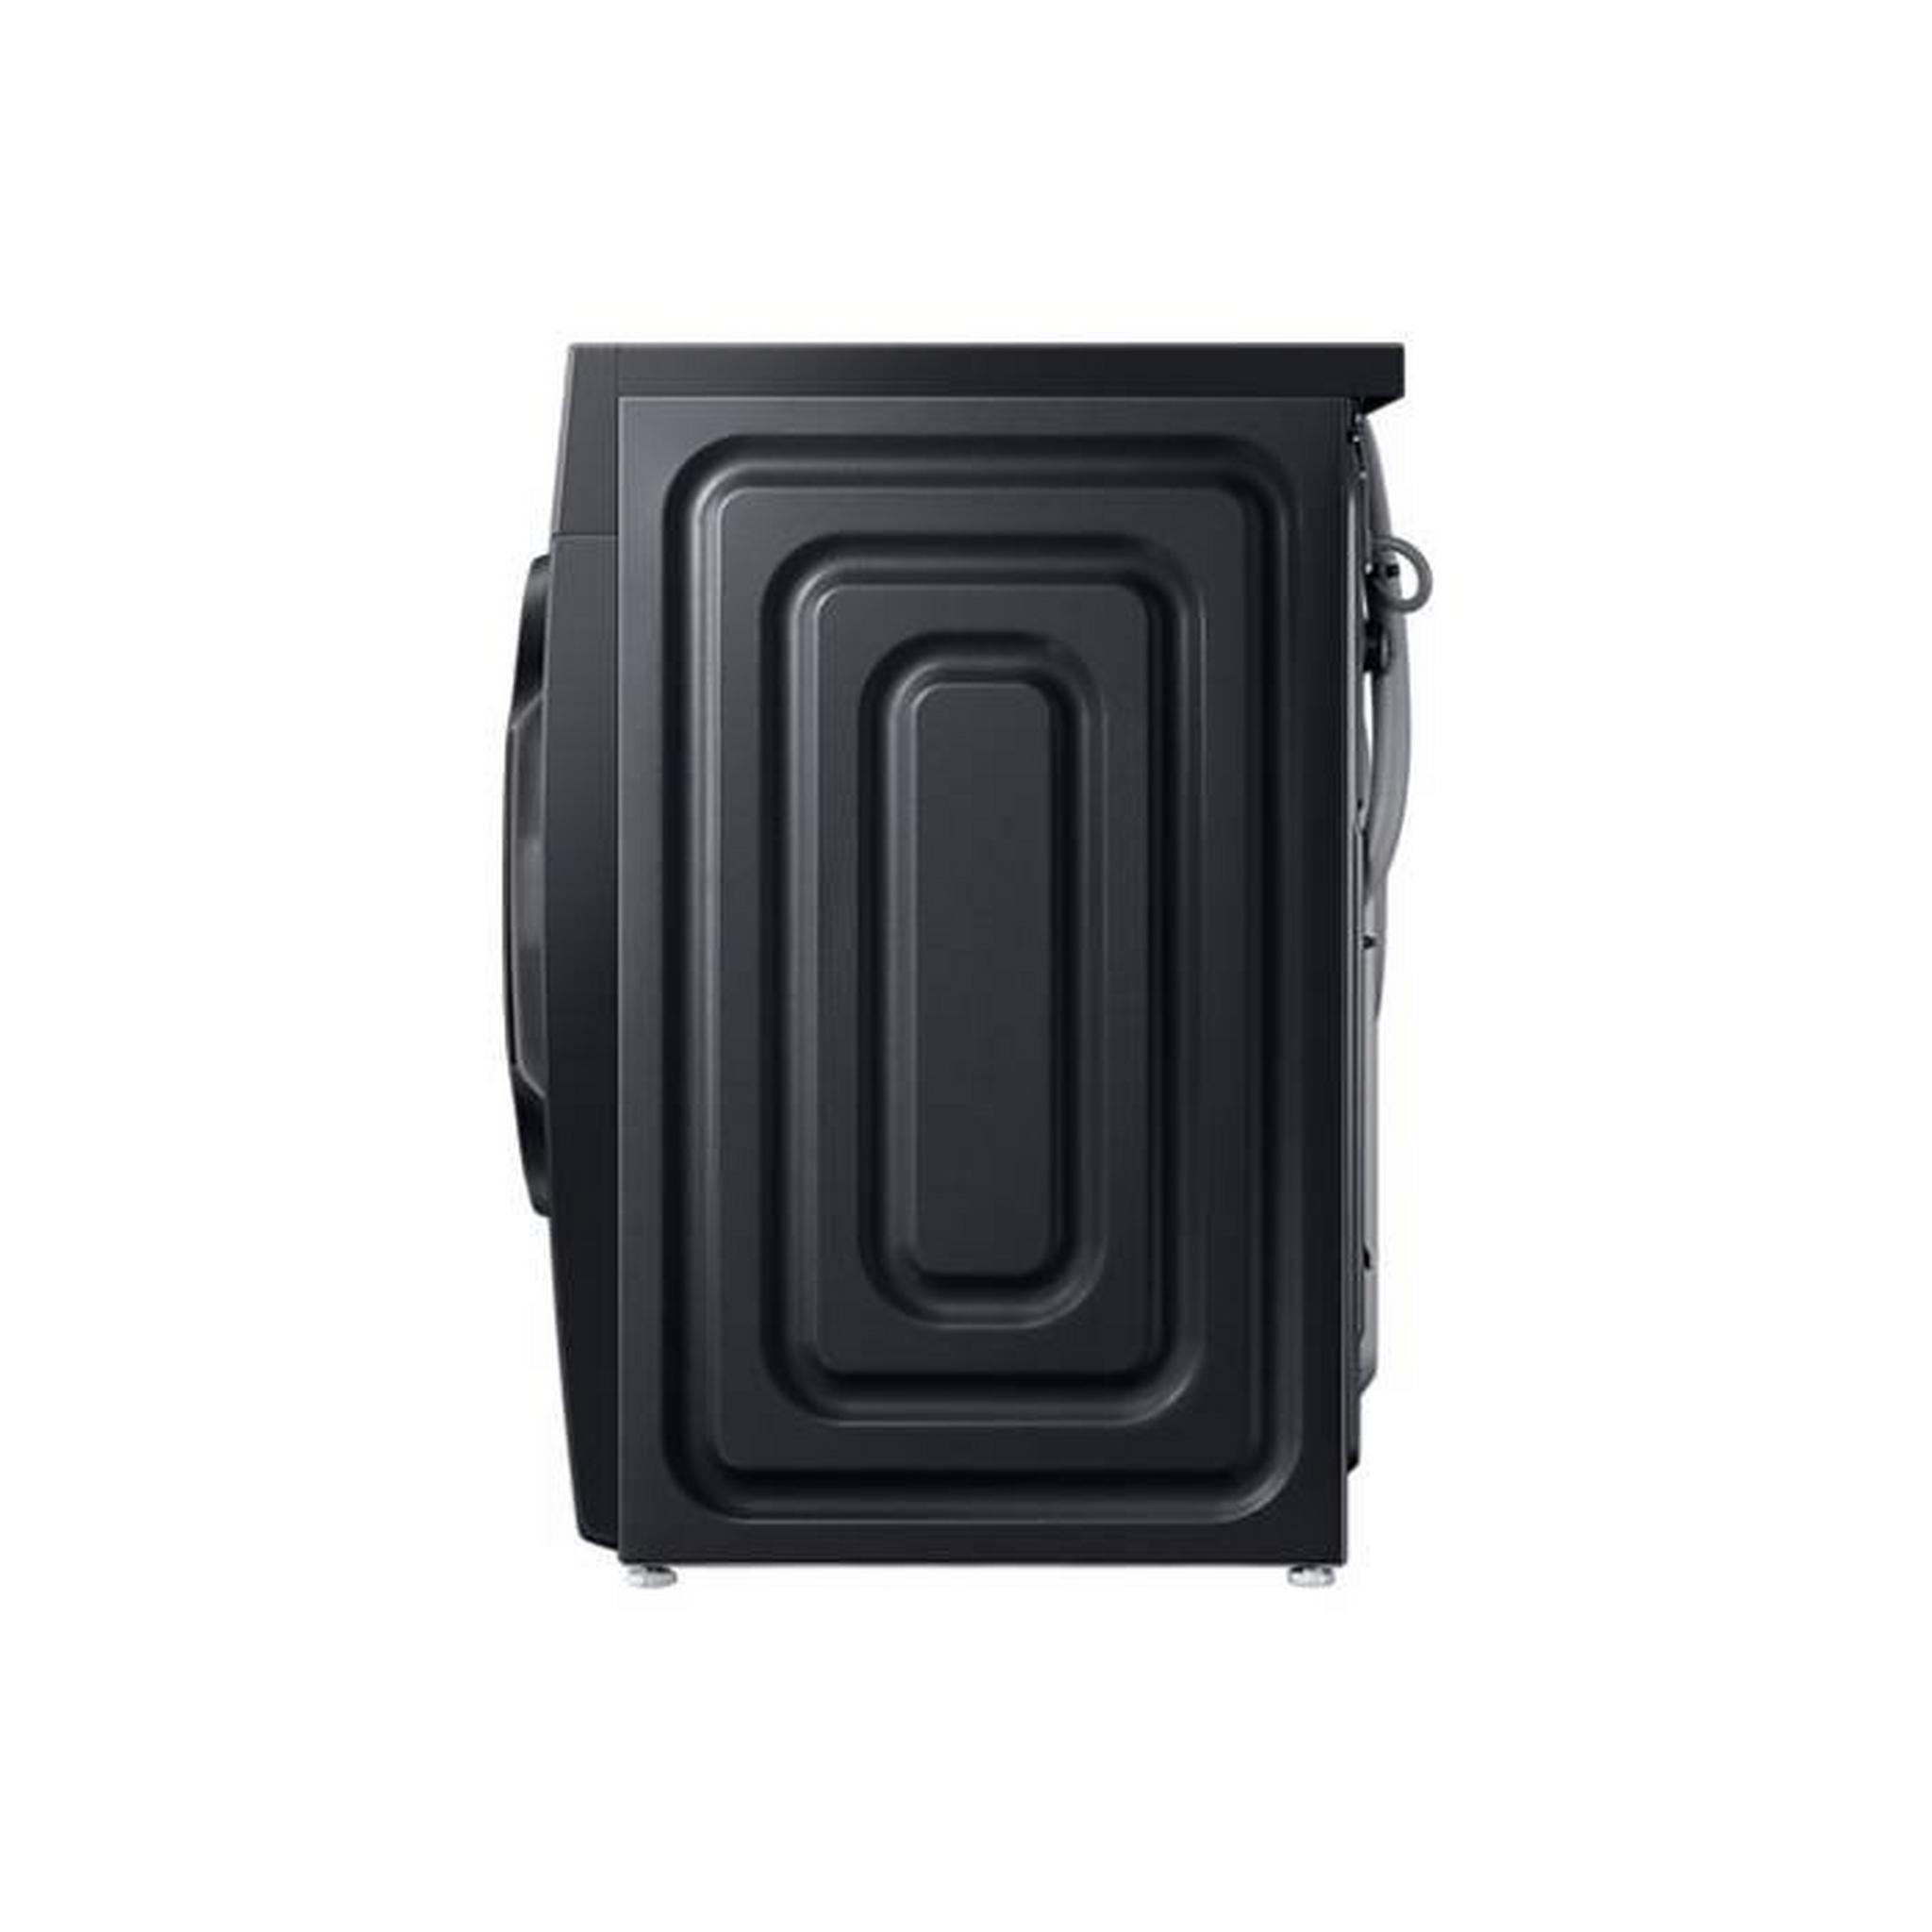 Samsung Front Load Washer, 9KG Washing Capacity, WW90CGC04DAB – Black